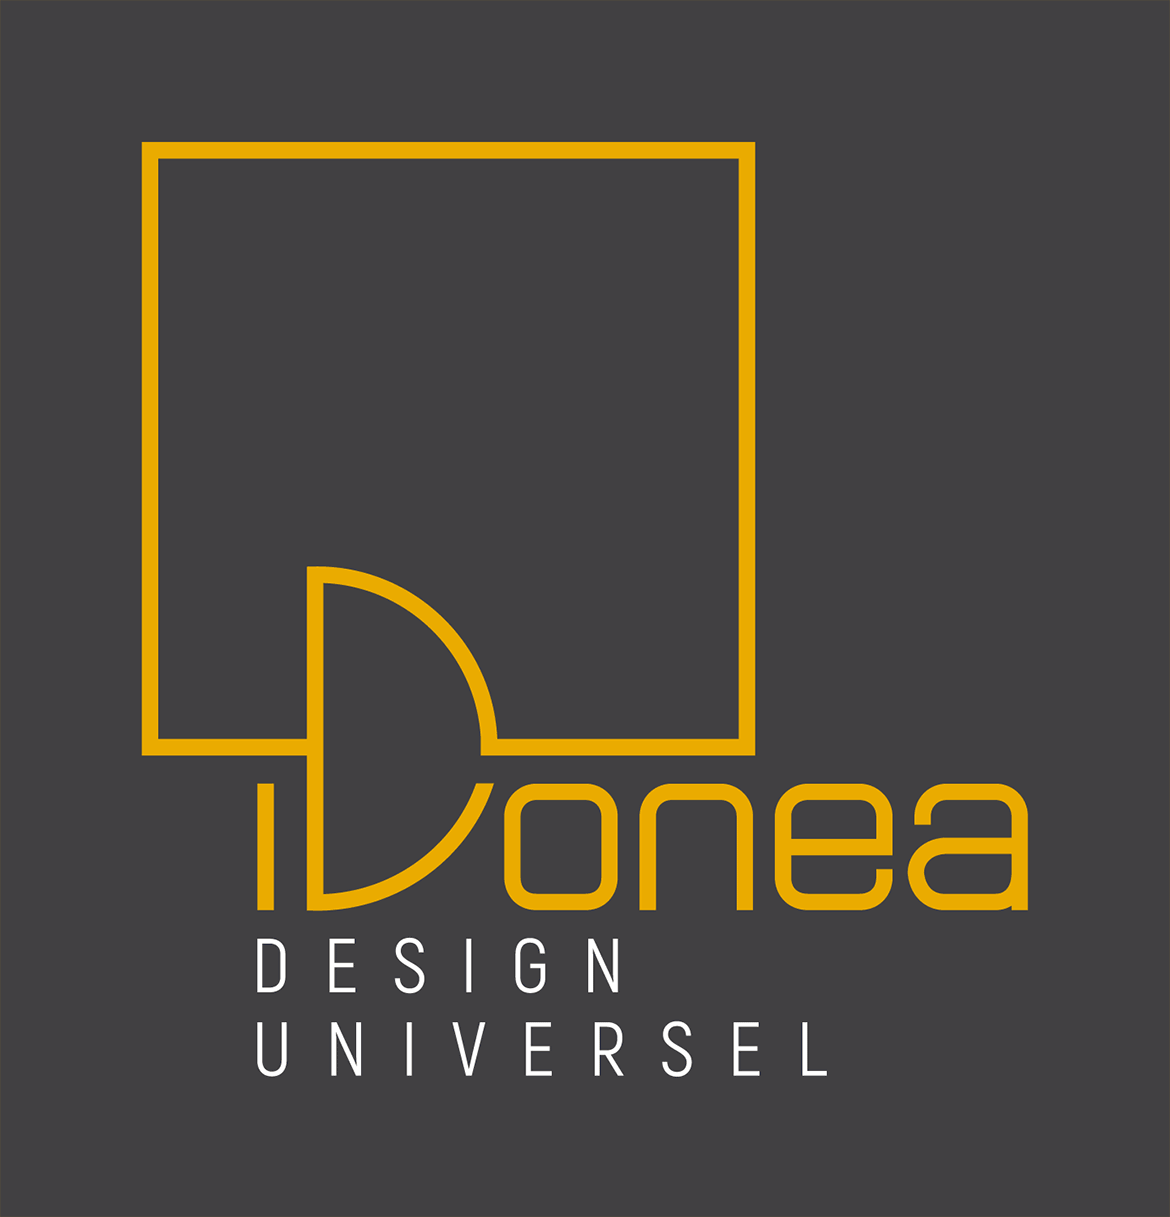 Idonea – Design Universel – Image de marque